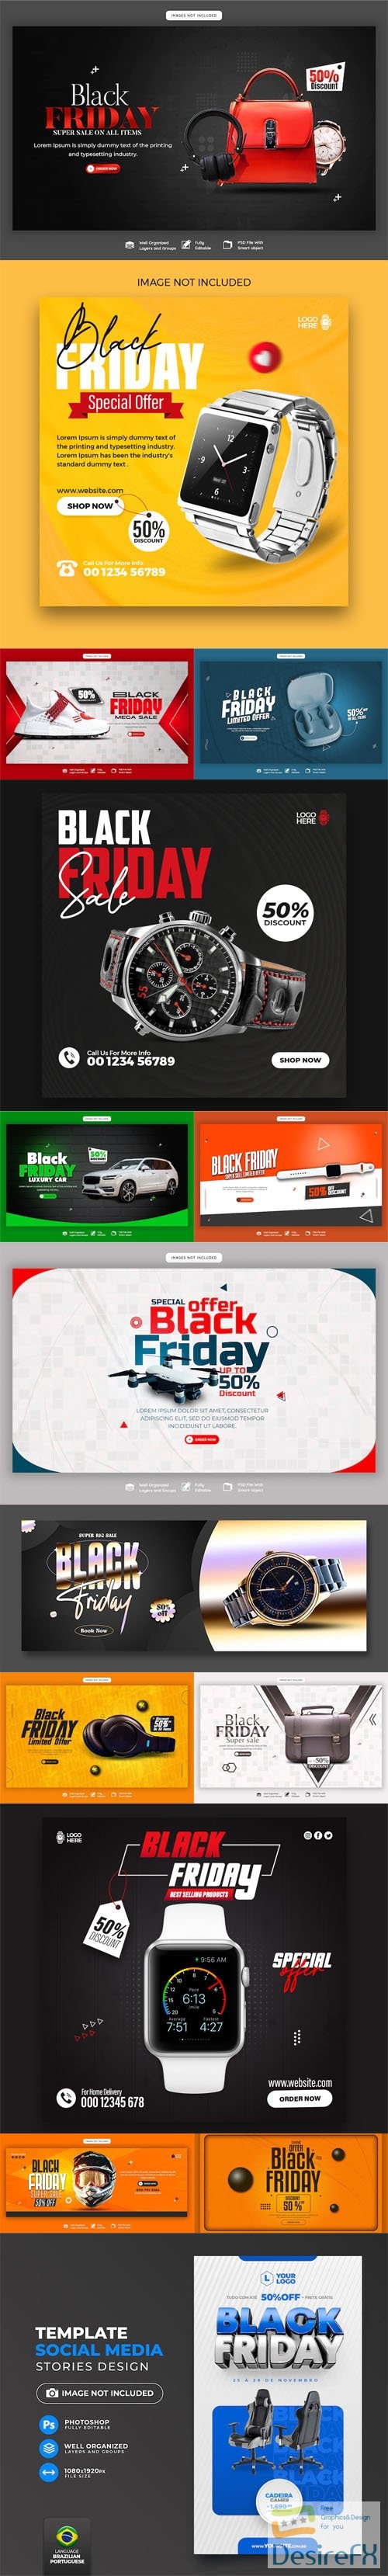 Black Friday - 15 Modern Web Banners PSD Templates Vol.2